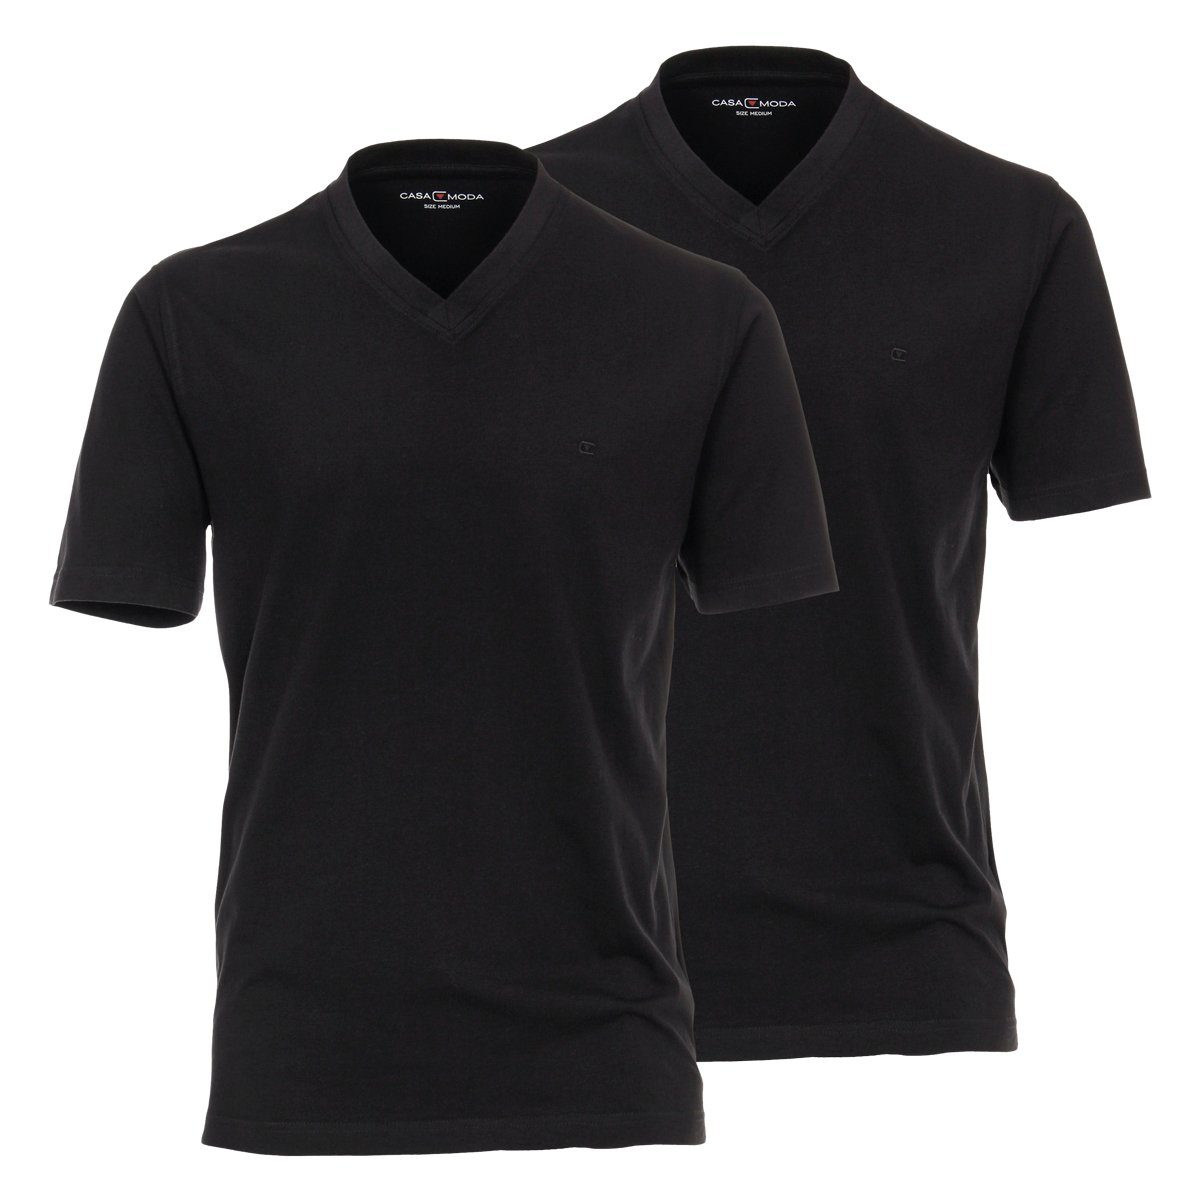 CASAMODA V-Shirt schwarz V-Ausschnitt CasaModa Doppelpack T-Shirts Übergrößen